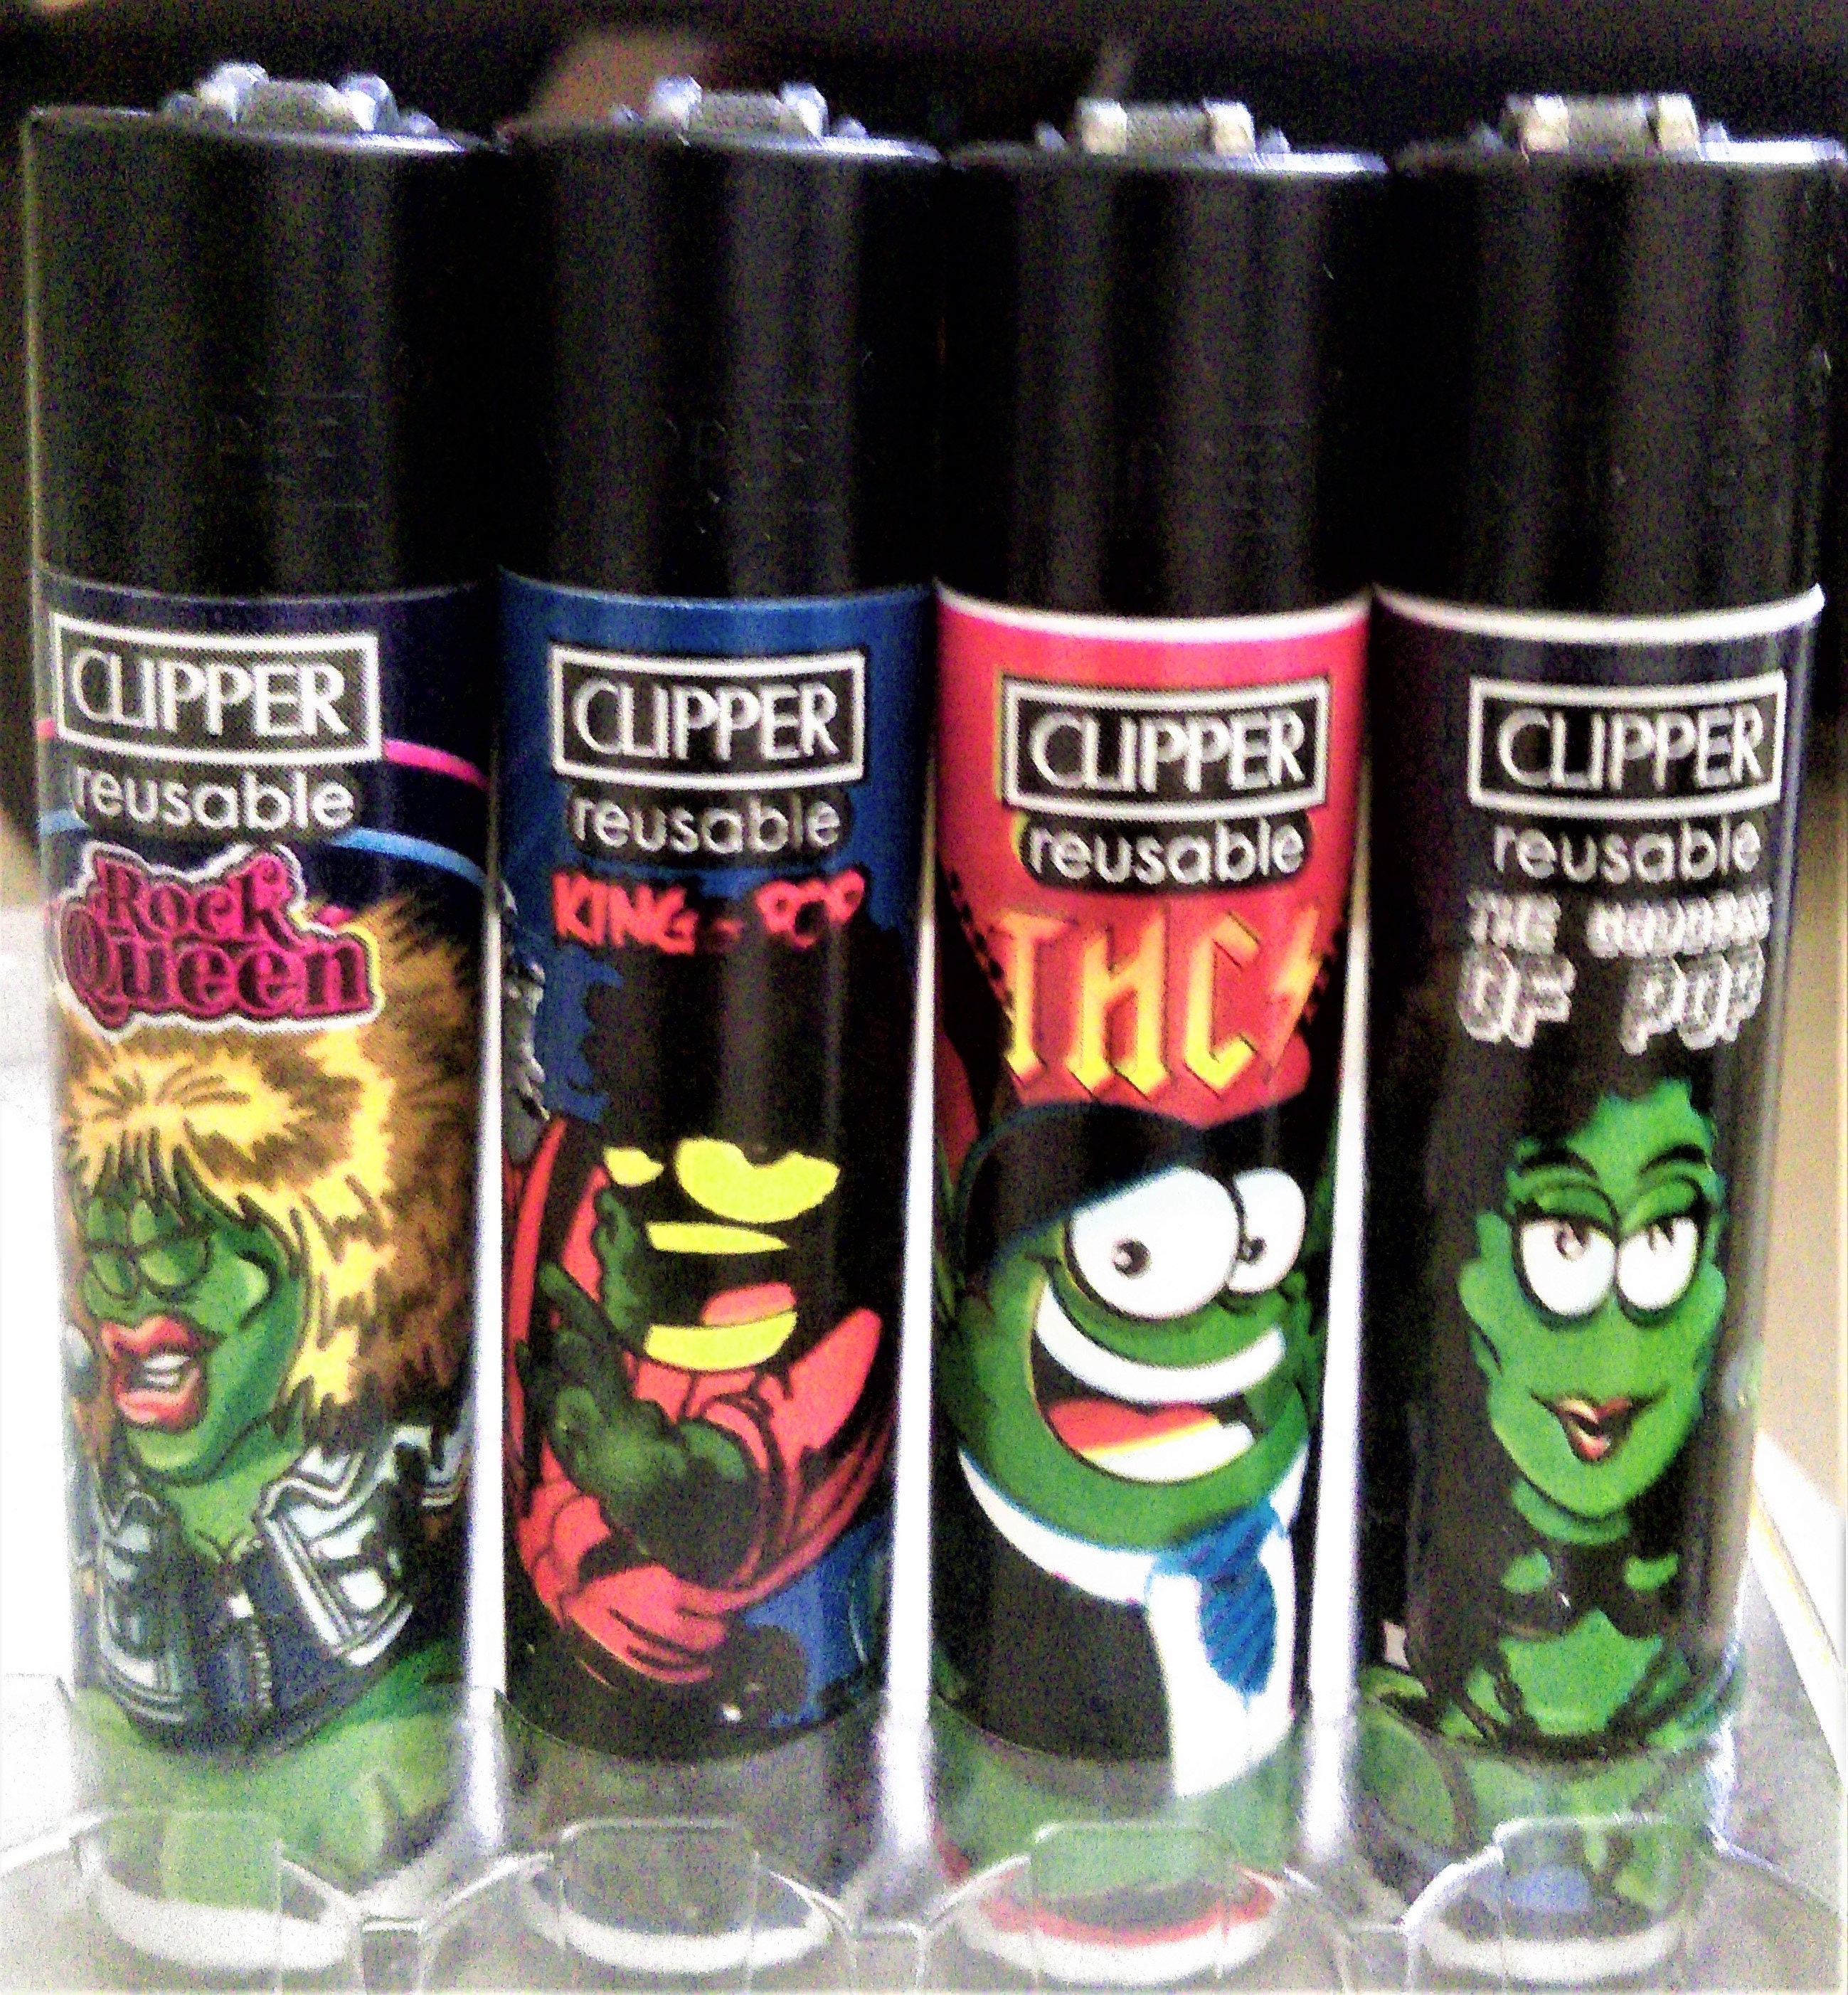 Steampunk Clipper Lighter Cover Clipper Lighter Case 